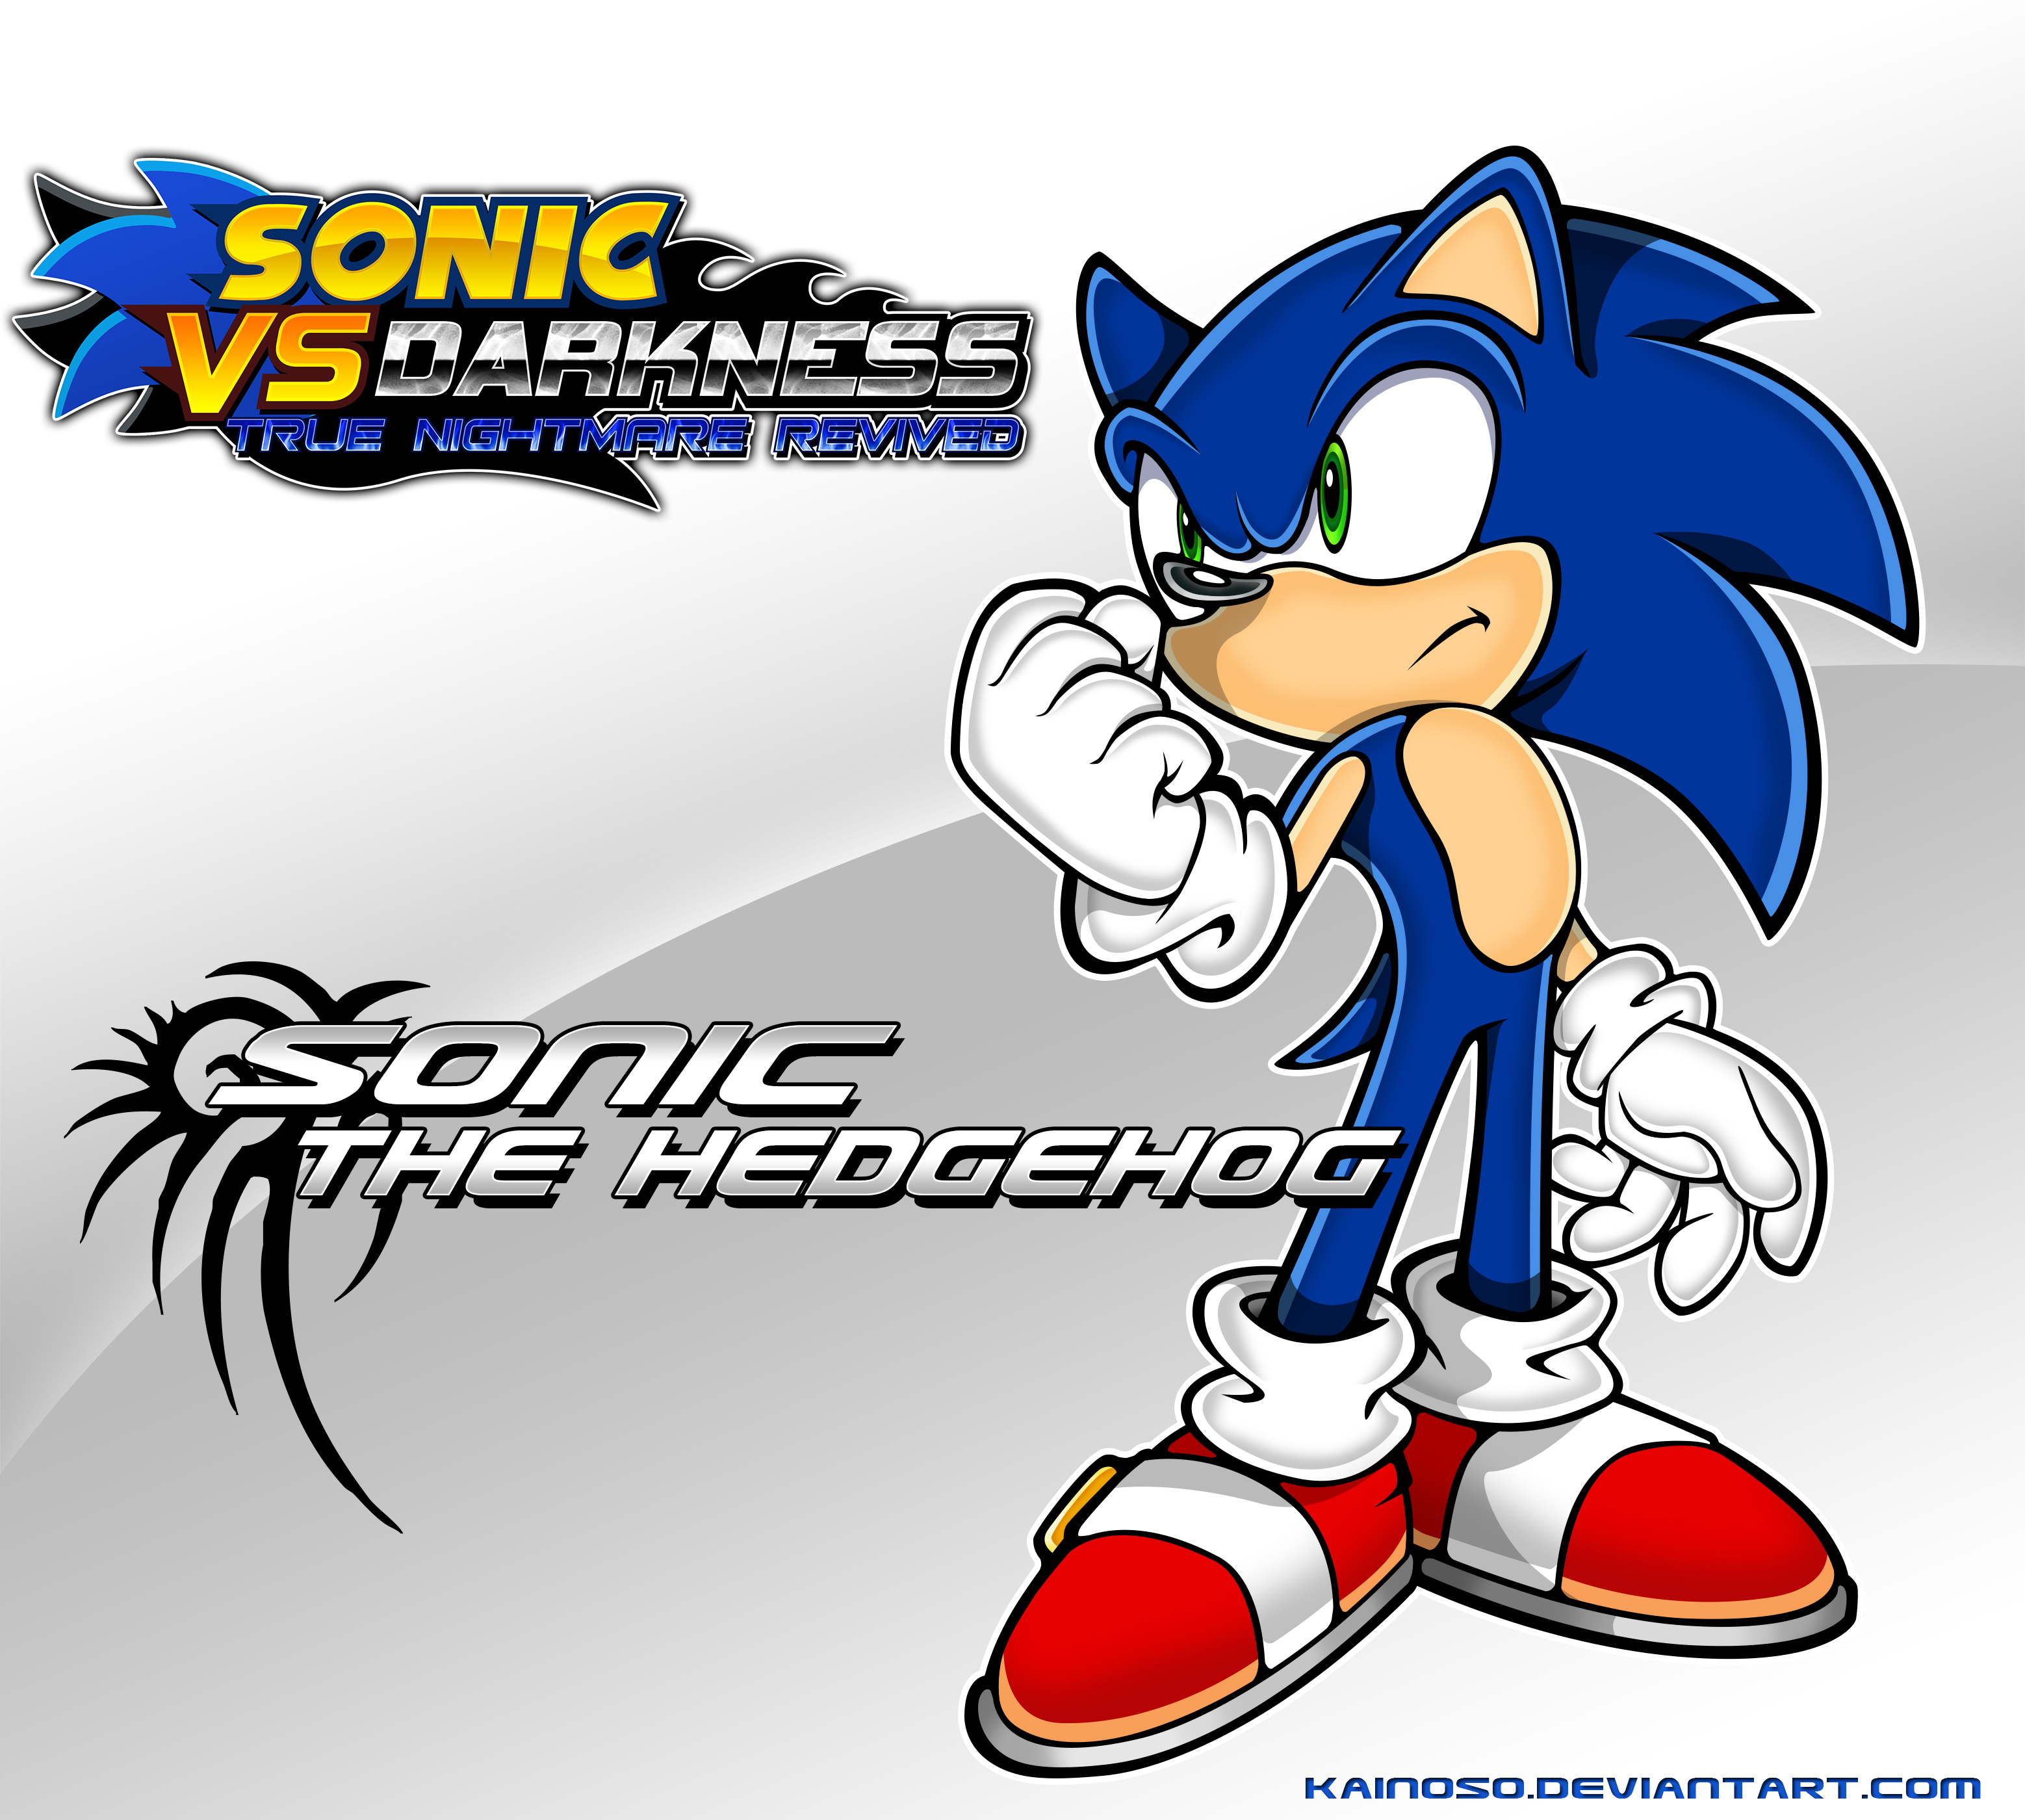 Sonic vs Darkness  Nefault1st Official Website